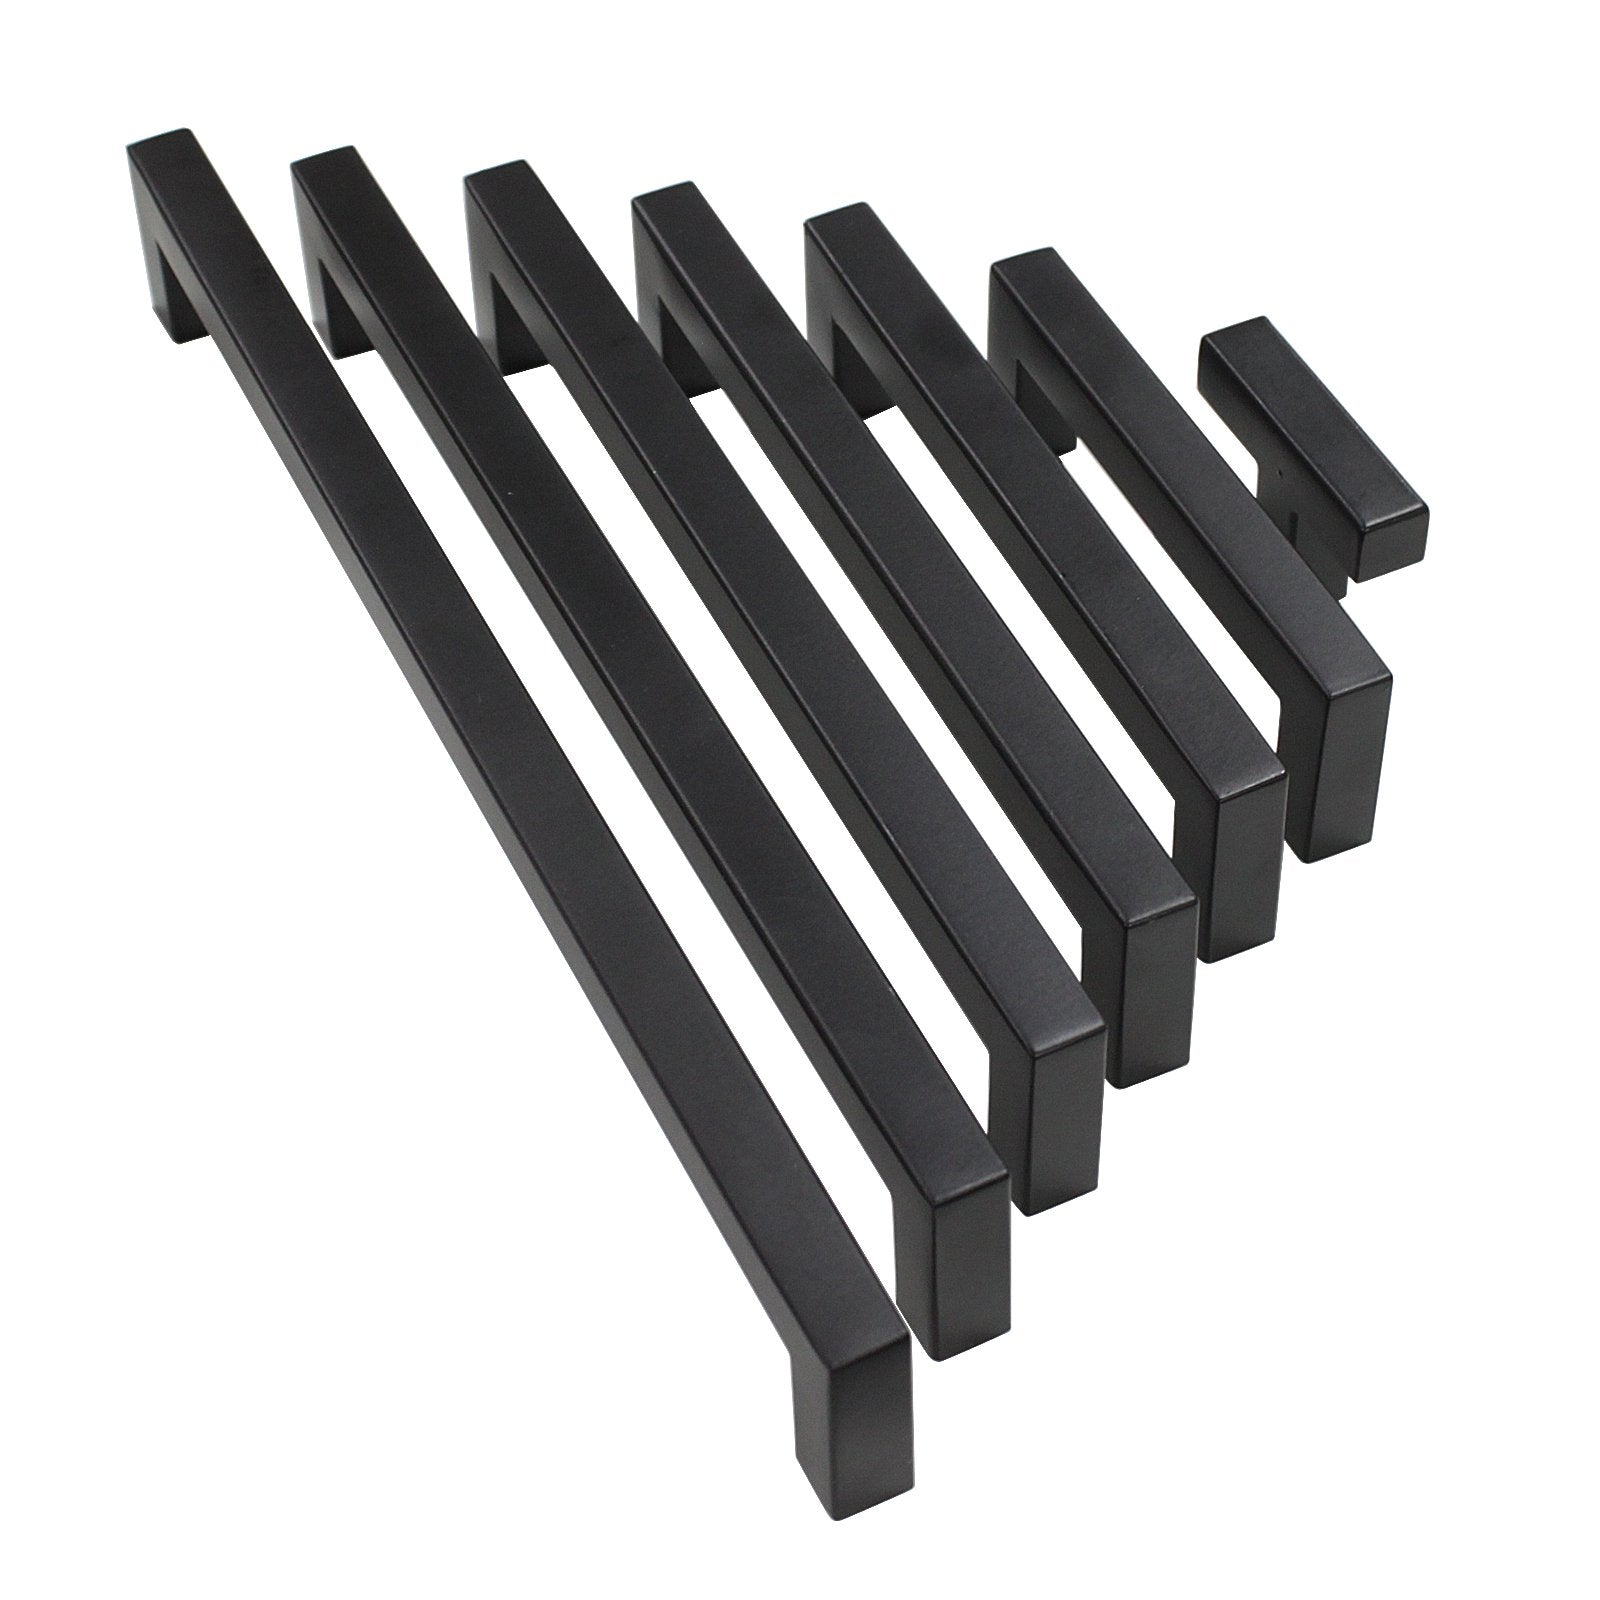 Probrico Black Cabinet Handles Modern Square Bar Drawer Pull 2-12 inch Hole Centers PDDJS12HBK 100 Packs